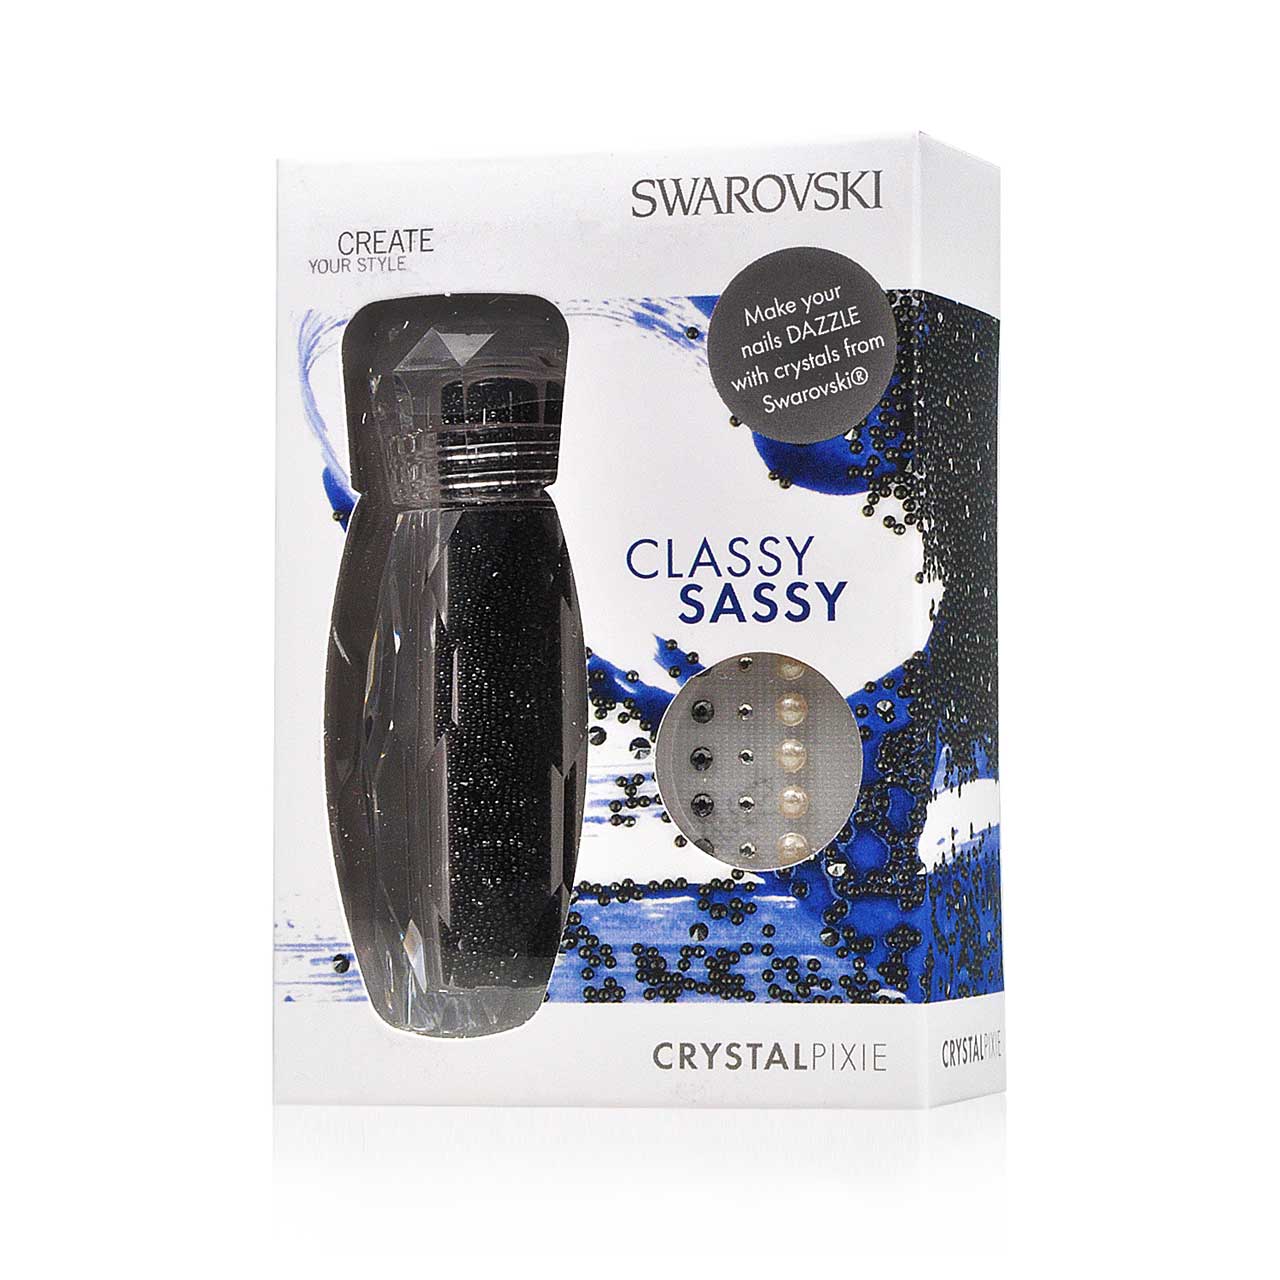 Swarovski Crystalpixie Nail Box - Classy Sassy